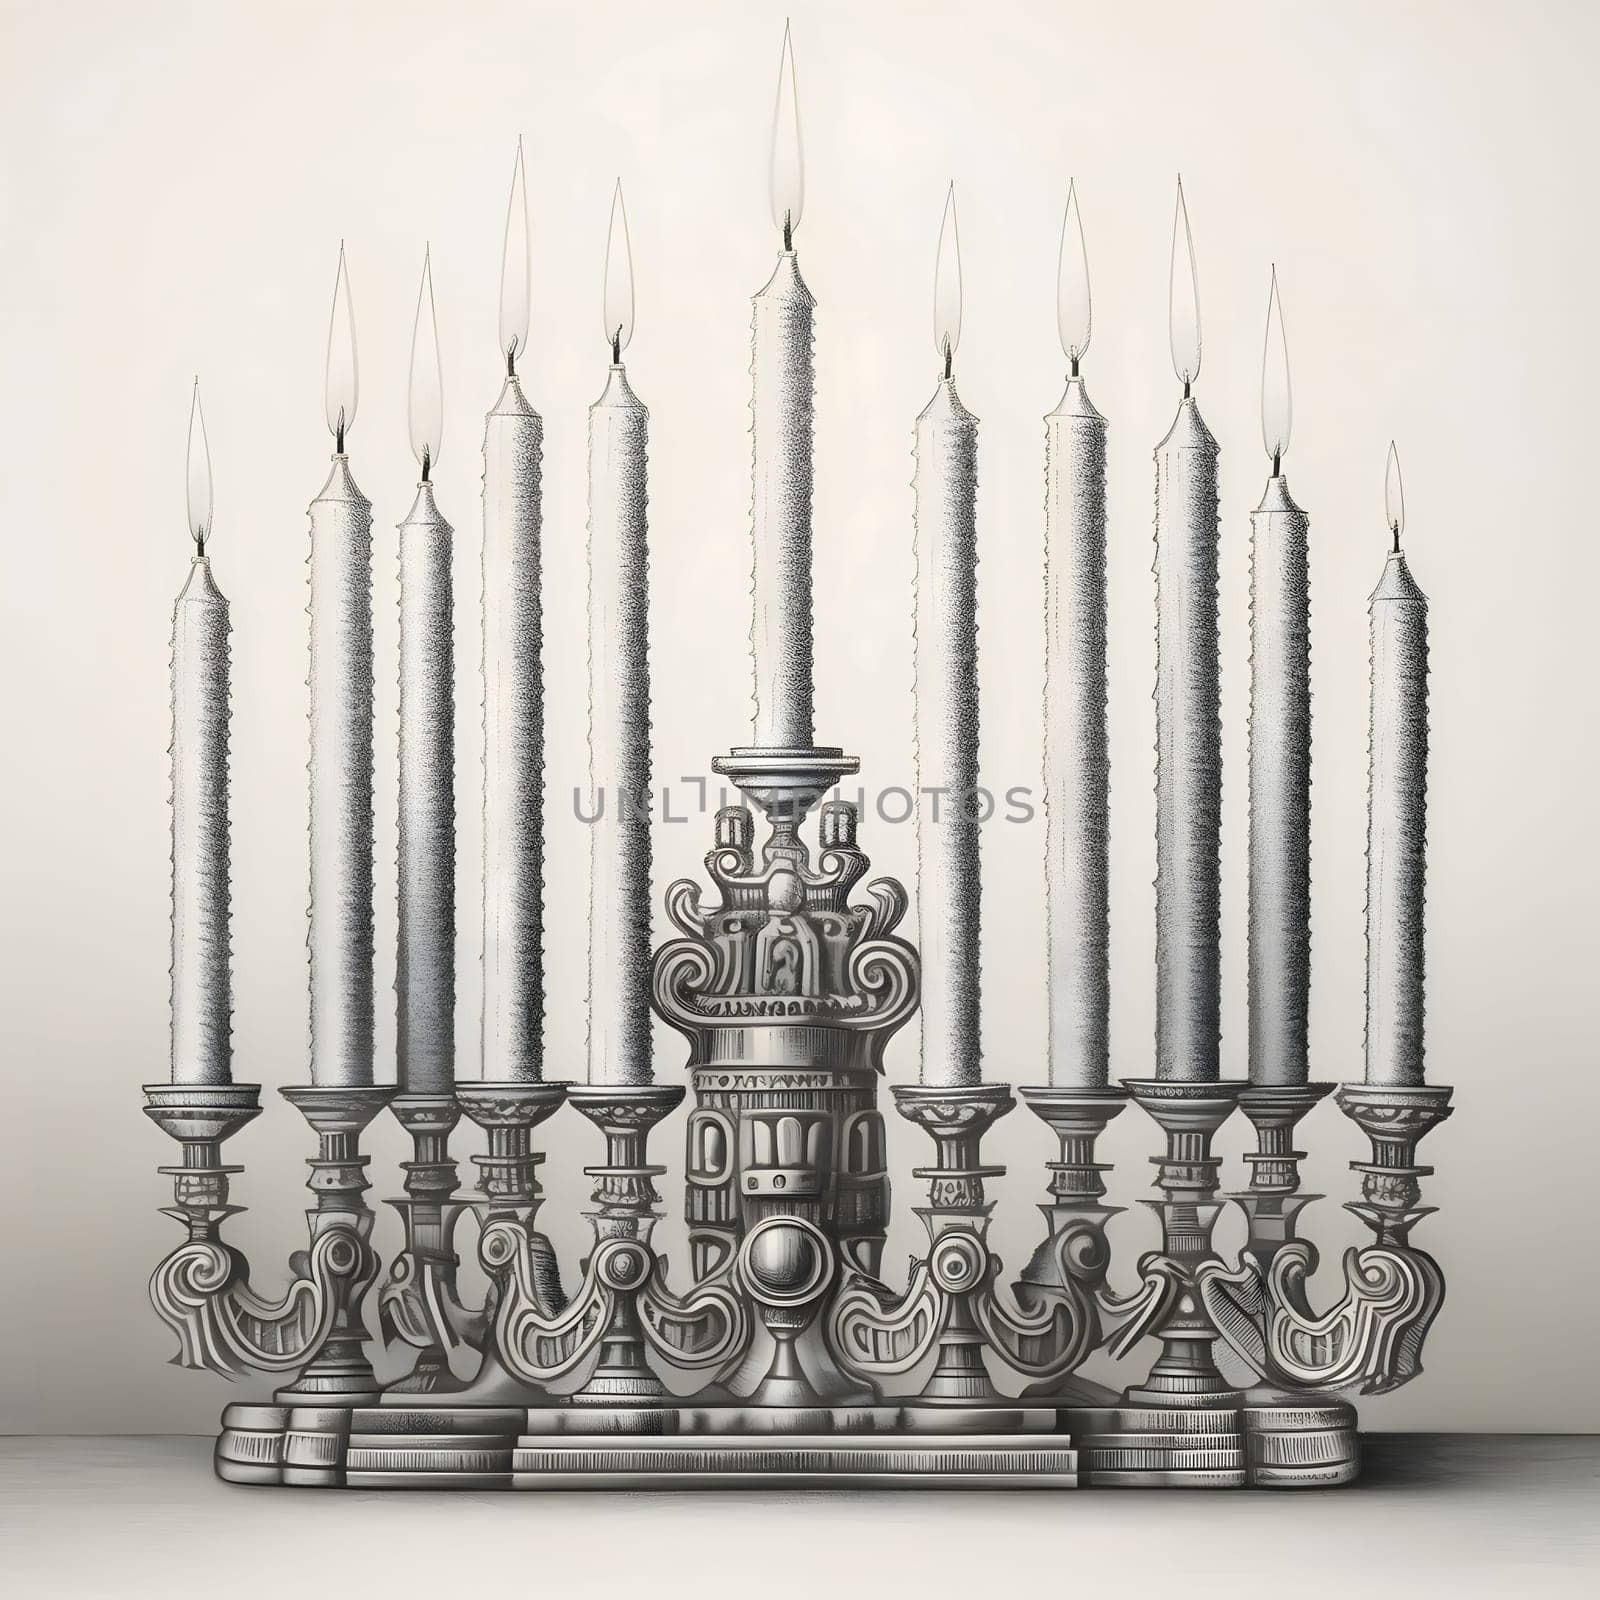 Image of a traditional Jewish Menorah candlestick. Bright background. Elegant and tasteful design.